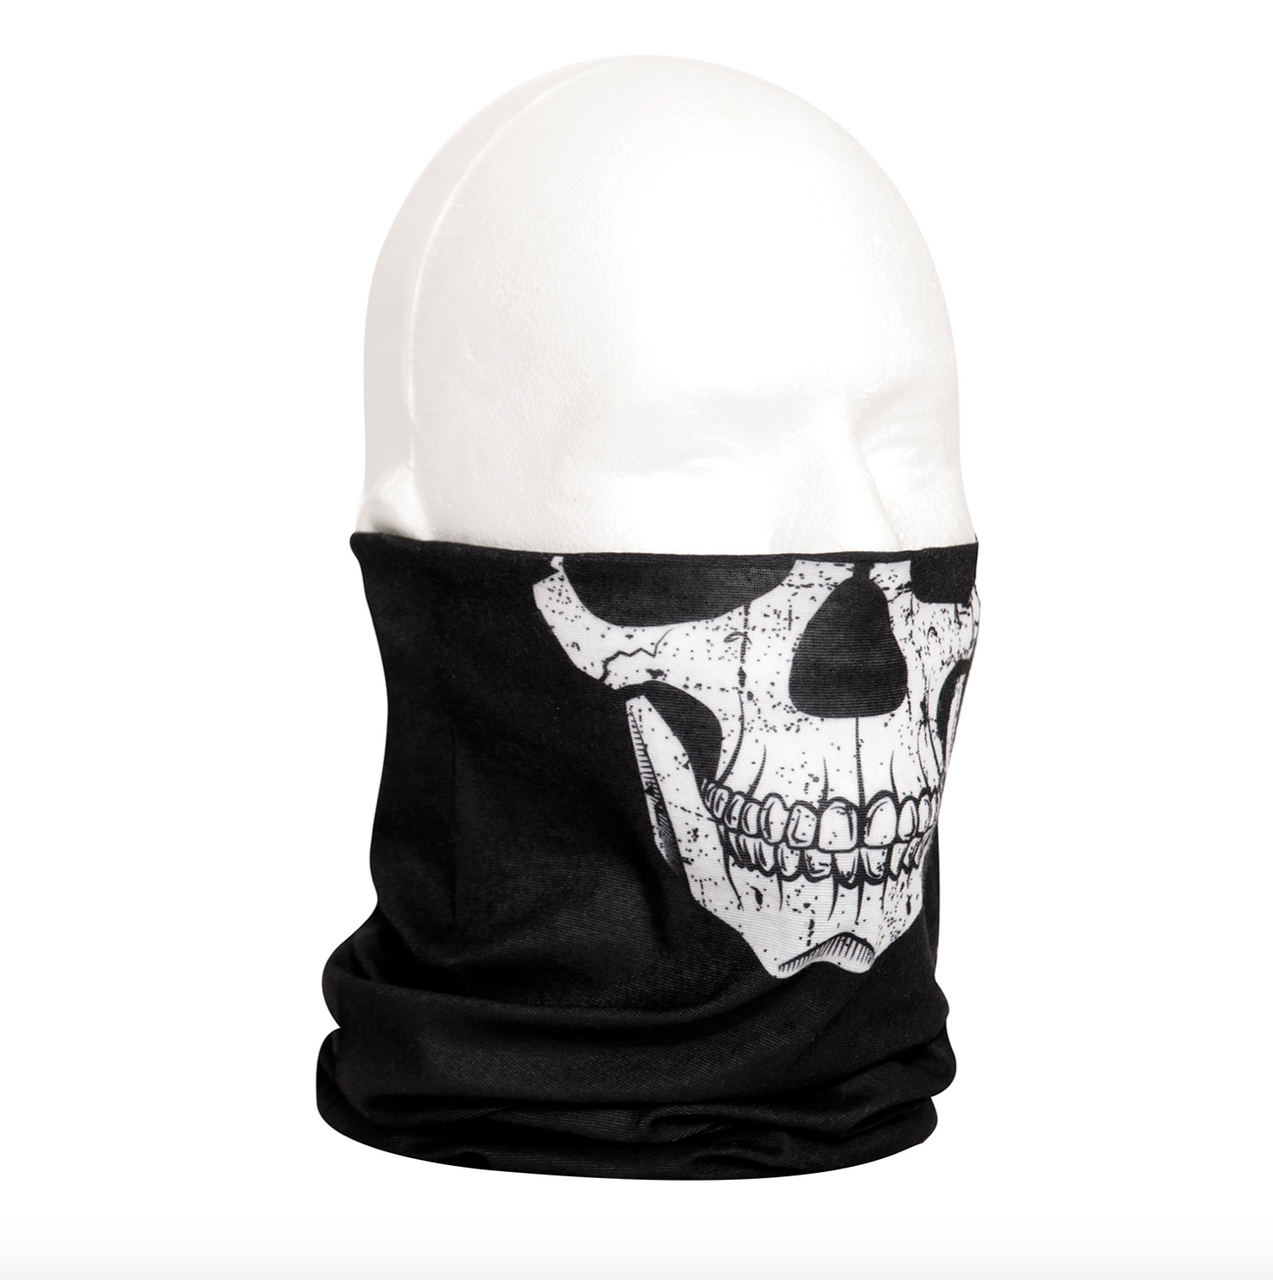 Skull Mask / Ghost Mask / Airsoft Mask / Ski Mask - Inspire Uplift